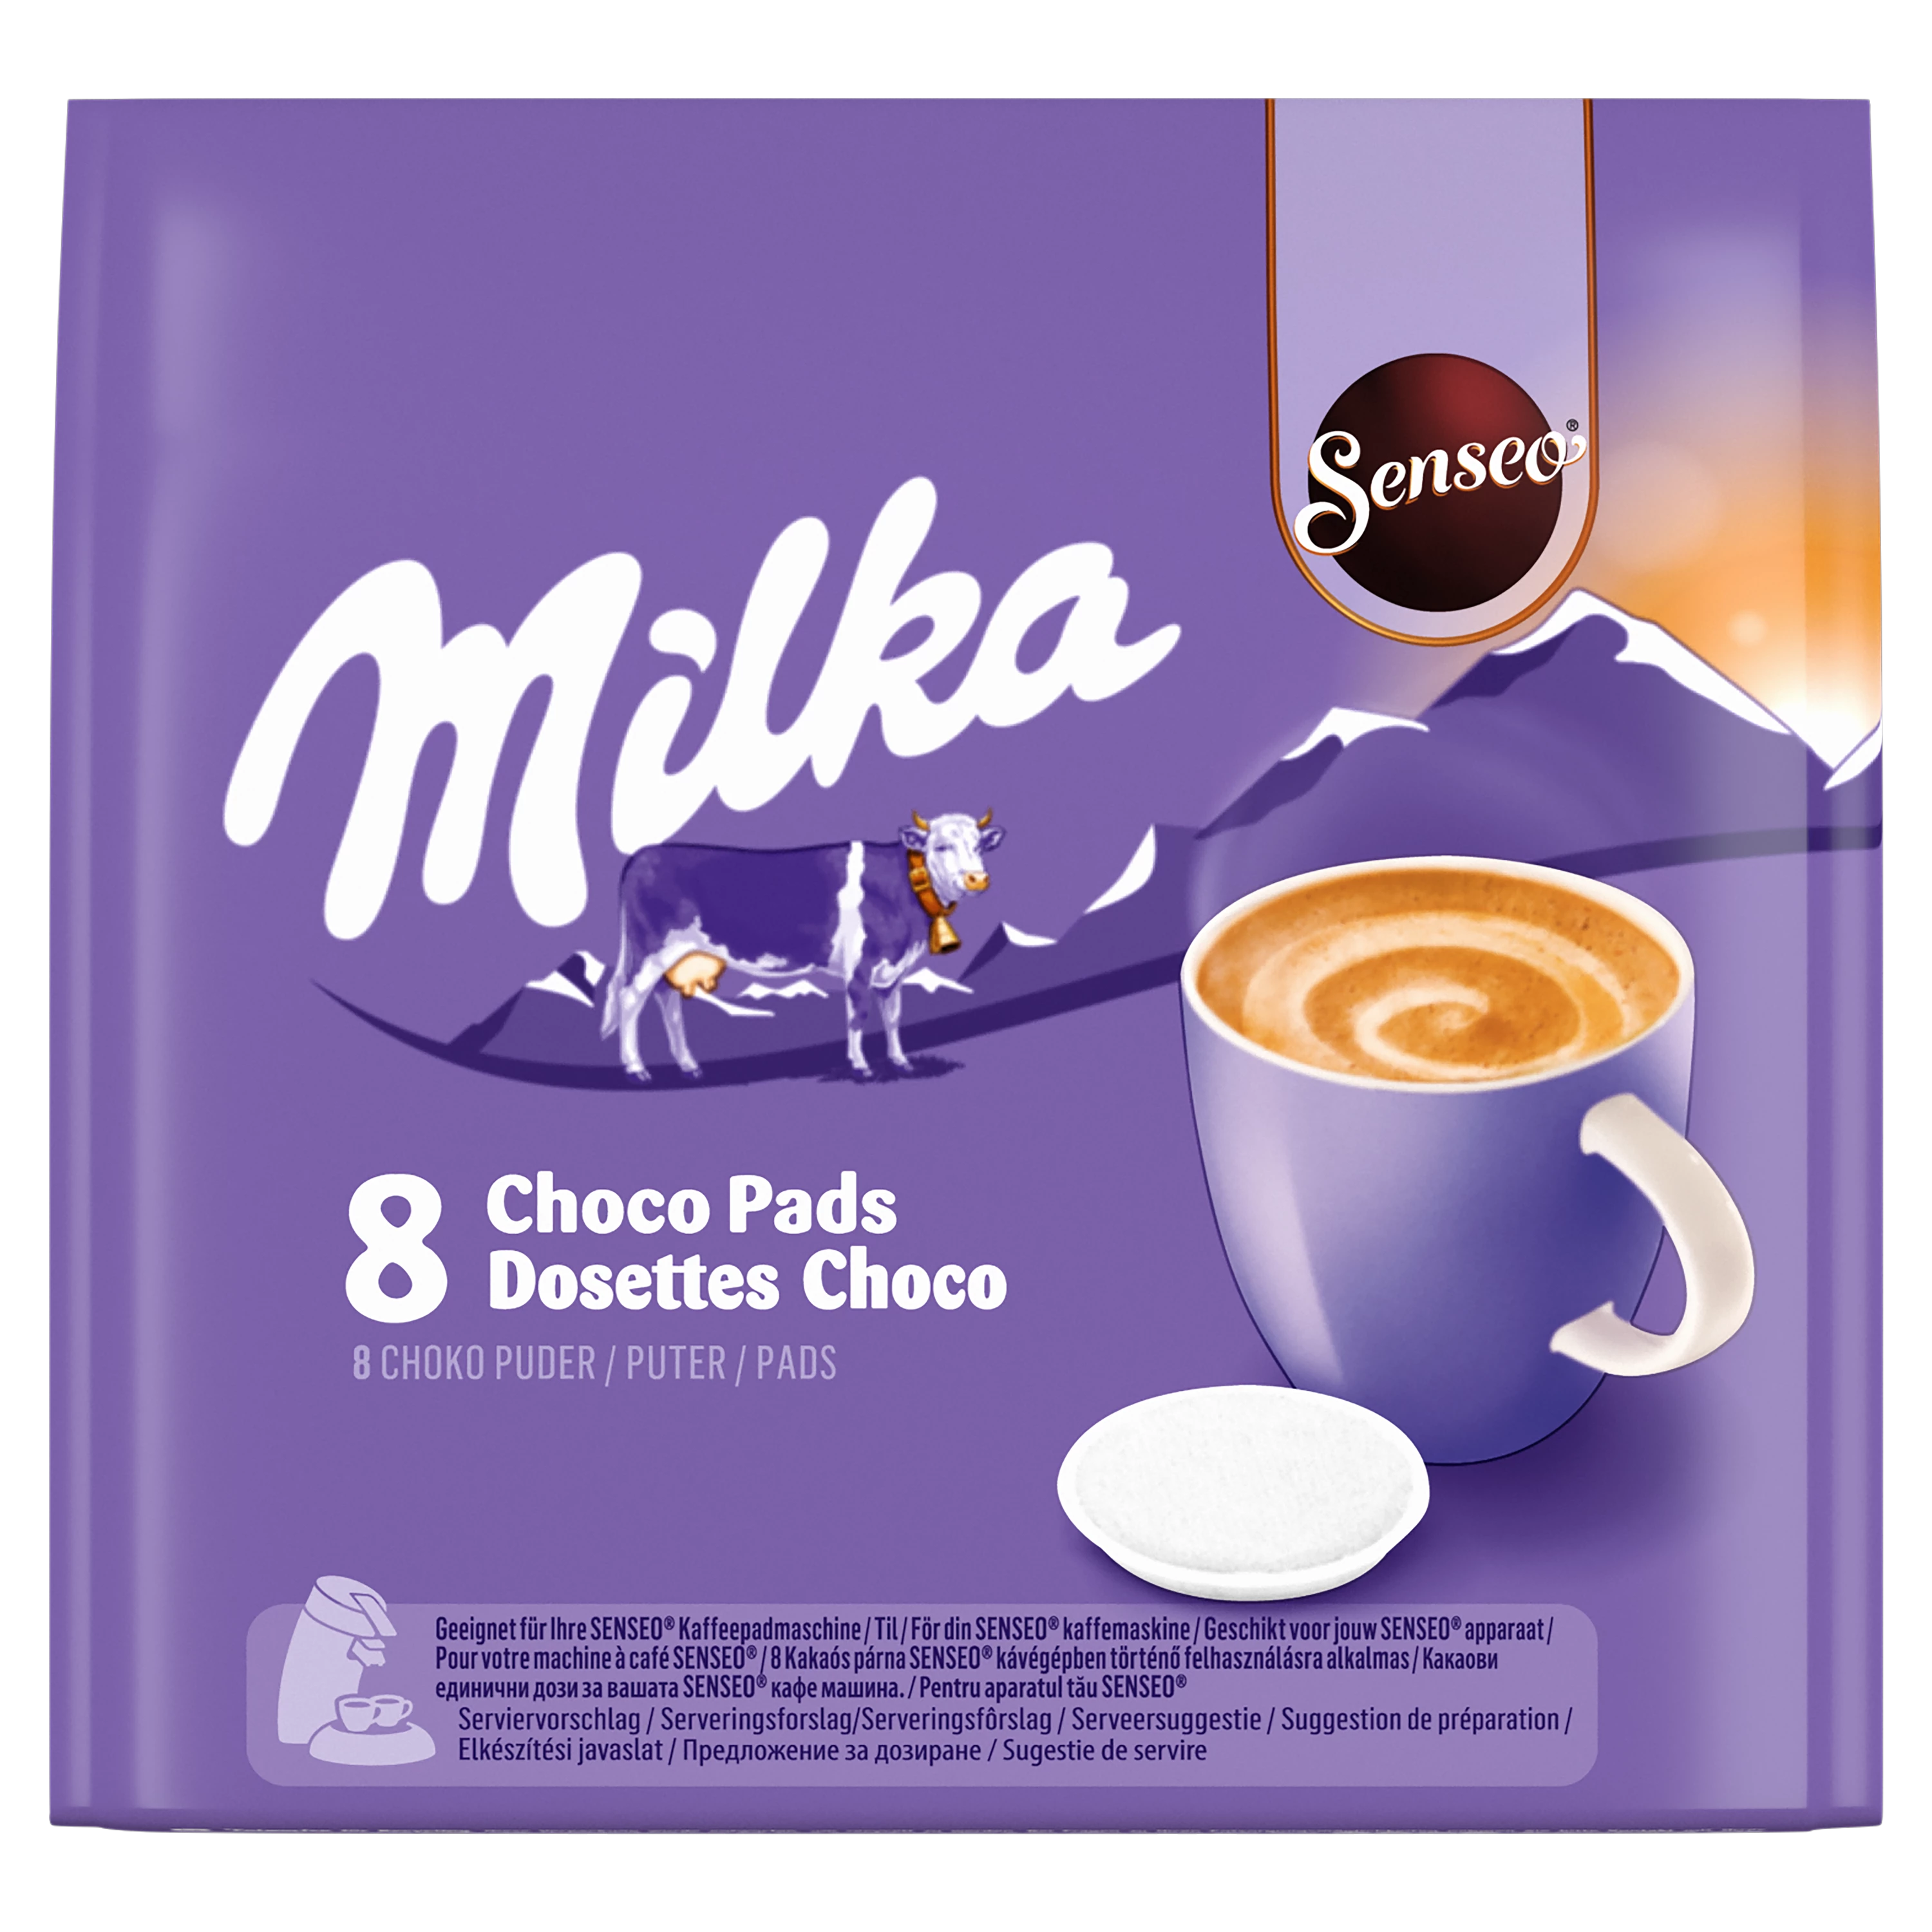 Verpakking van Senseo Milka Choco Pads.